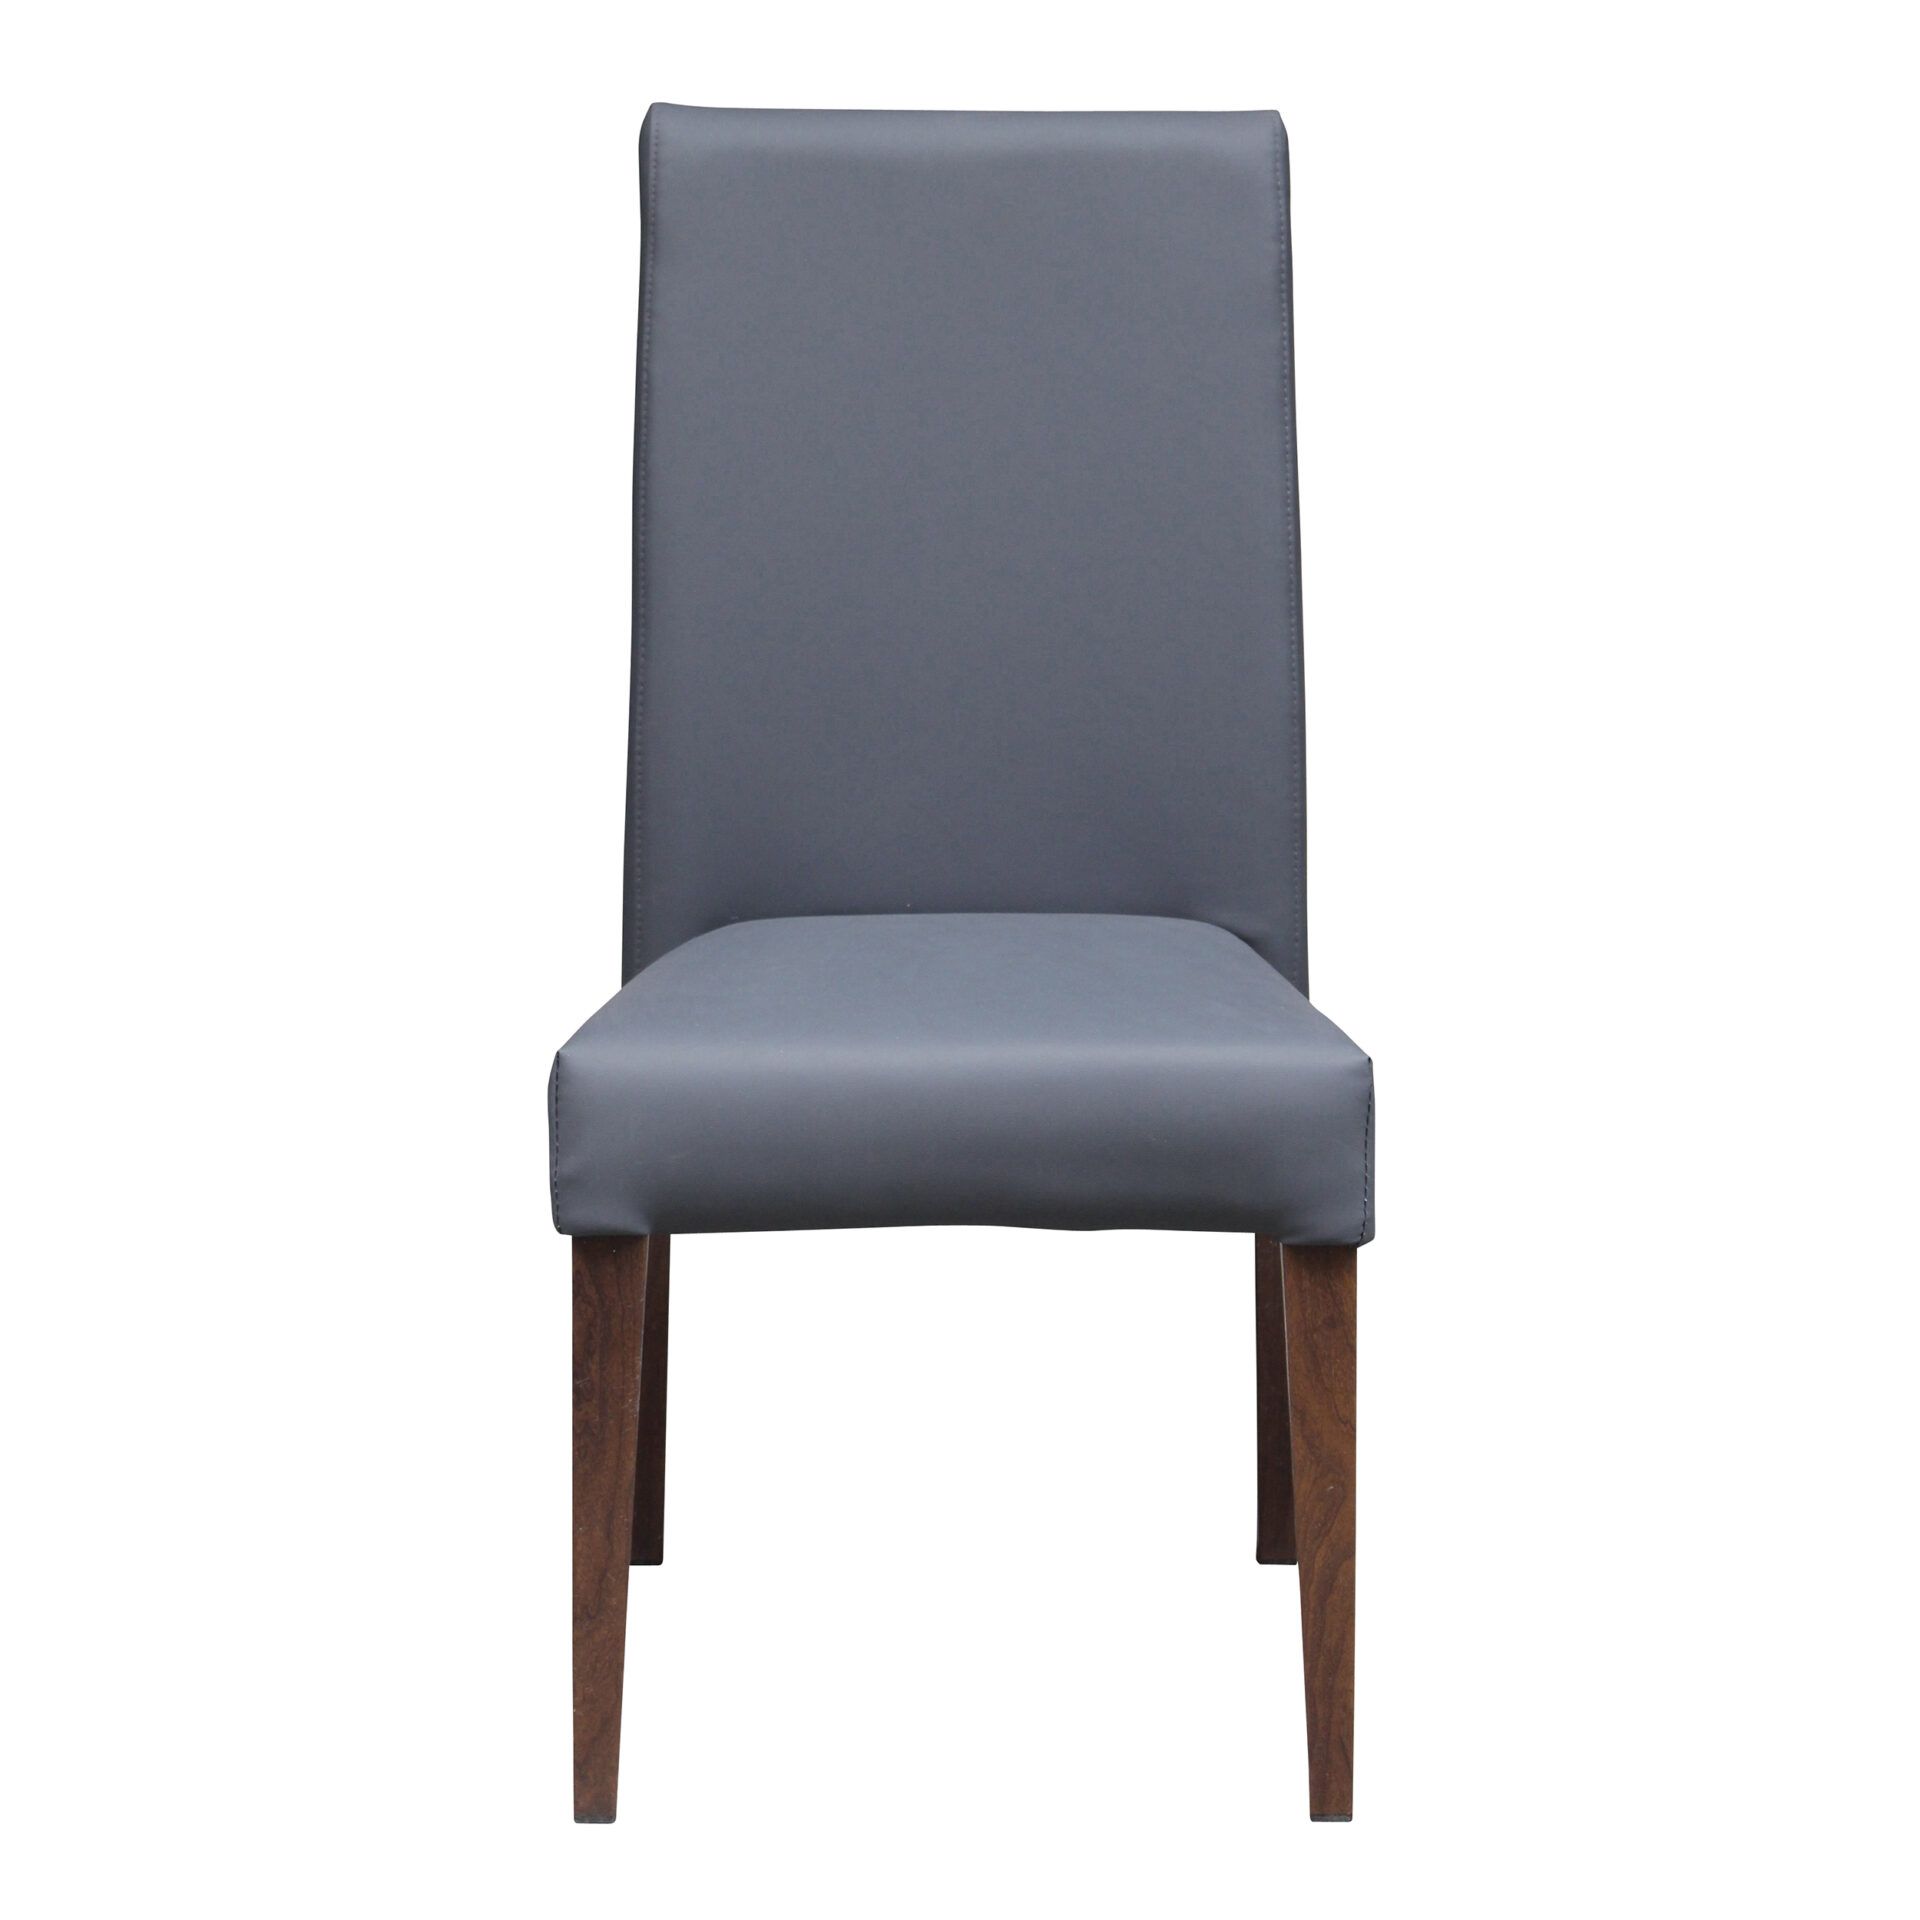 London Chair Grey 1 1